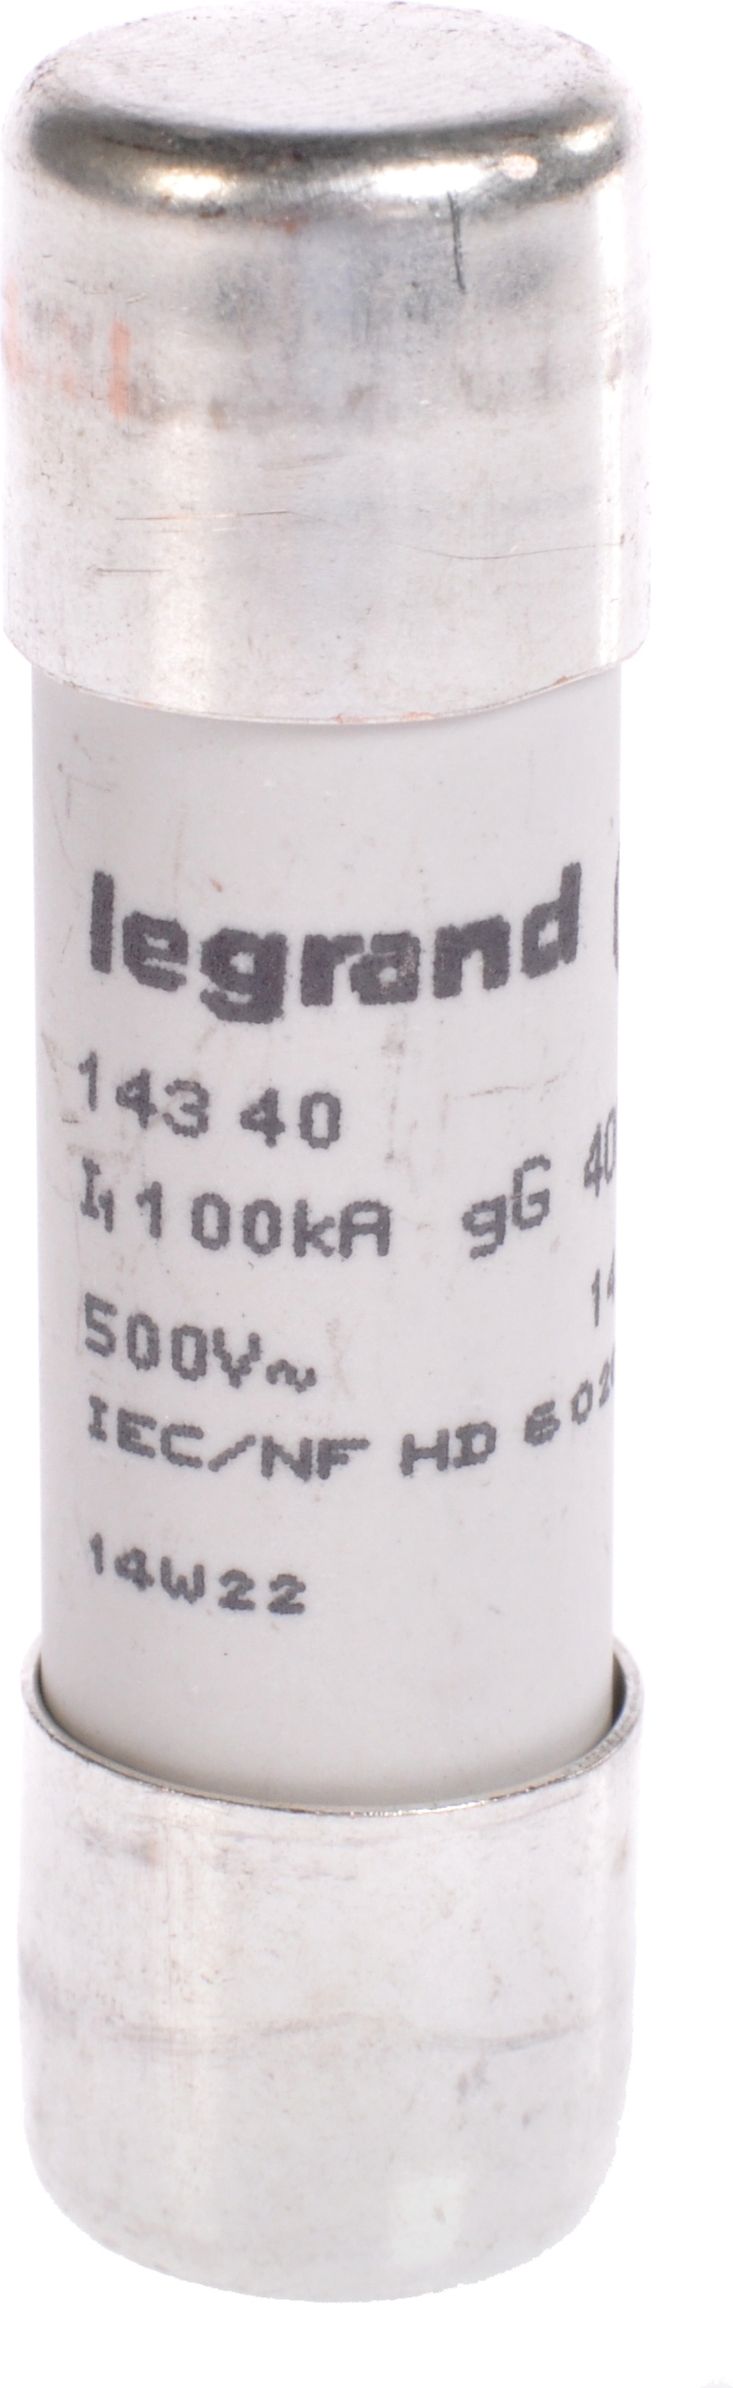 Siguranțe cilindrice 40A gL 500V HPC 14 x 51mm (014340)